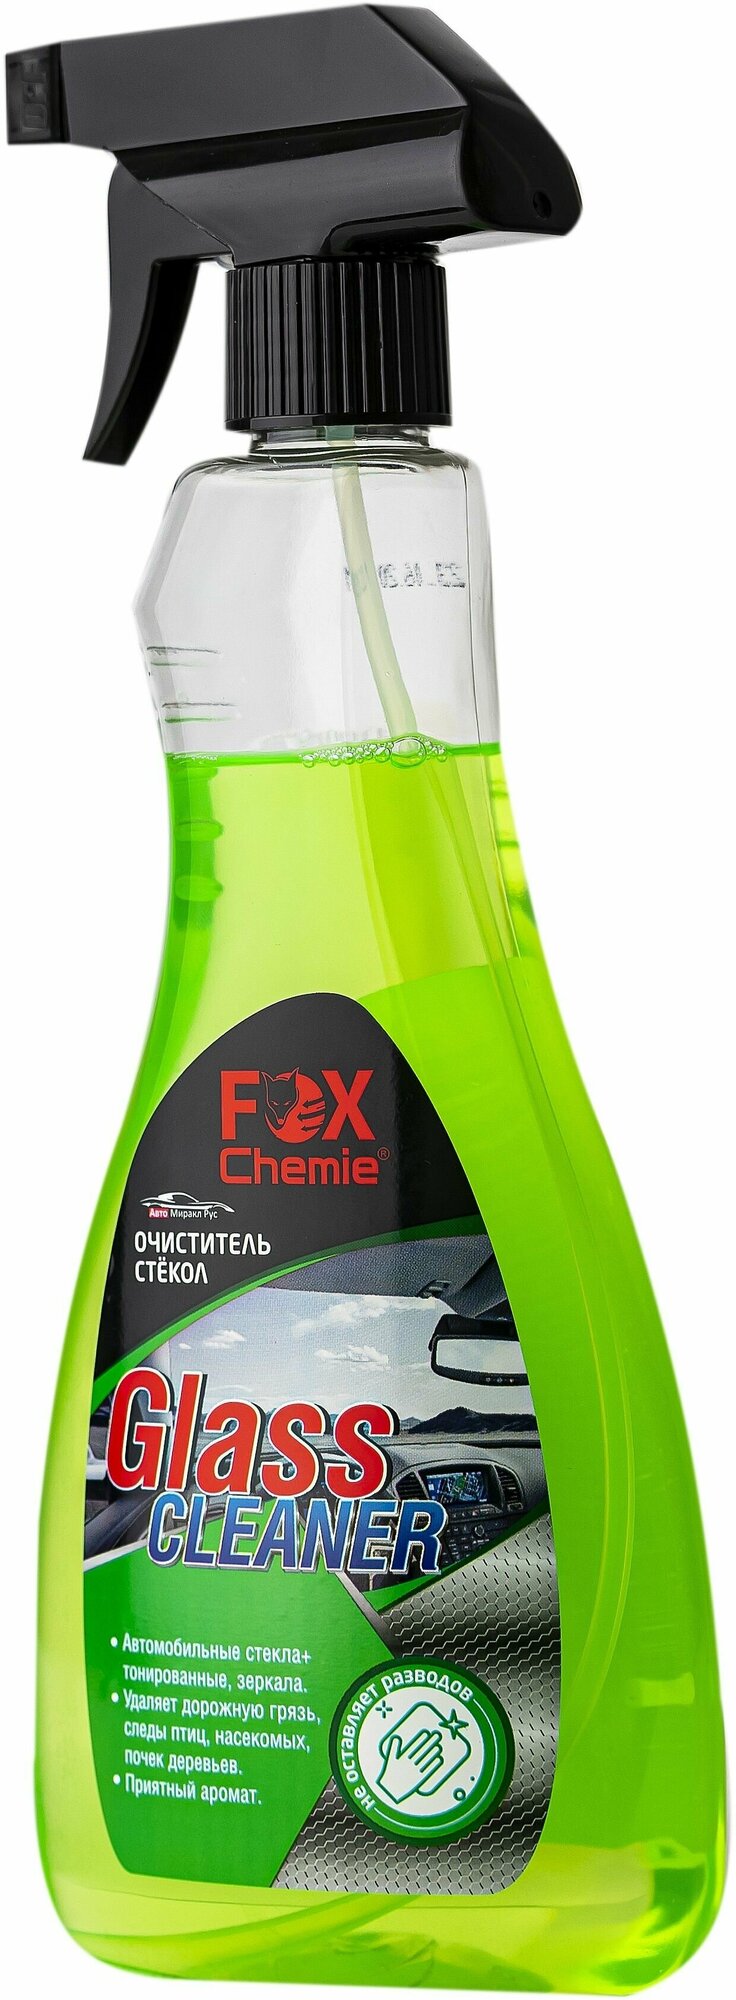 Очиститель для стекол Fox Chemie 05 л (84954217)